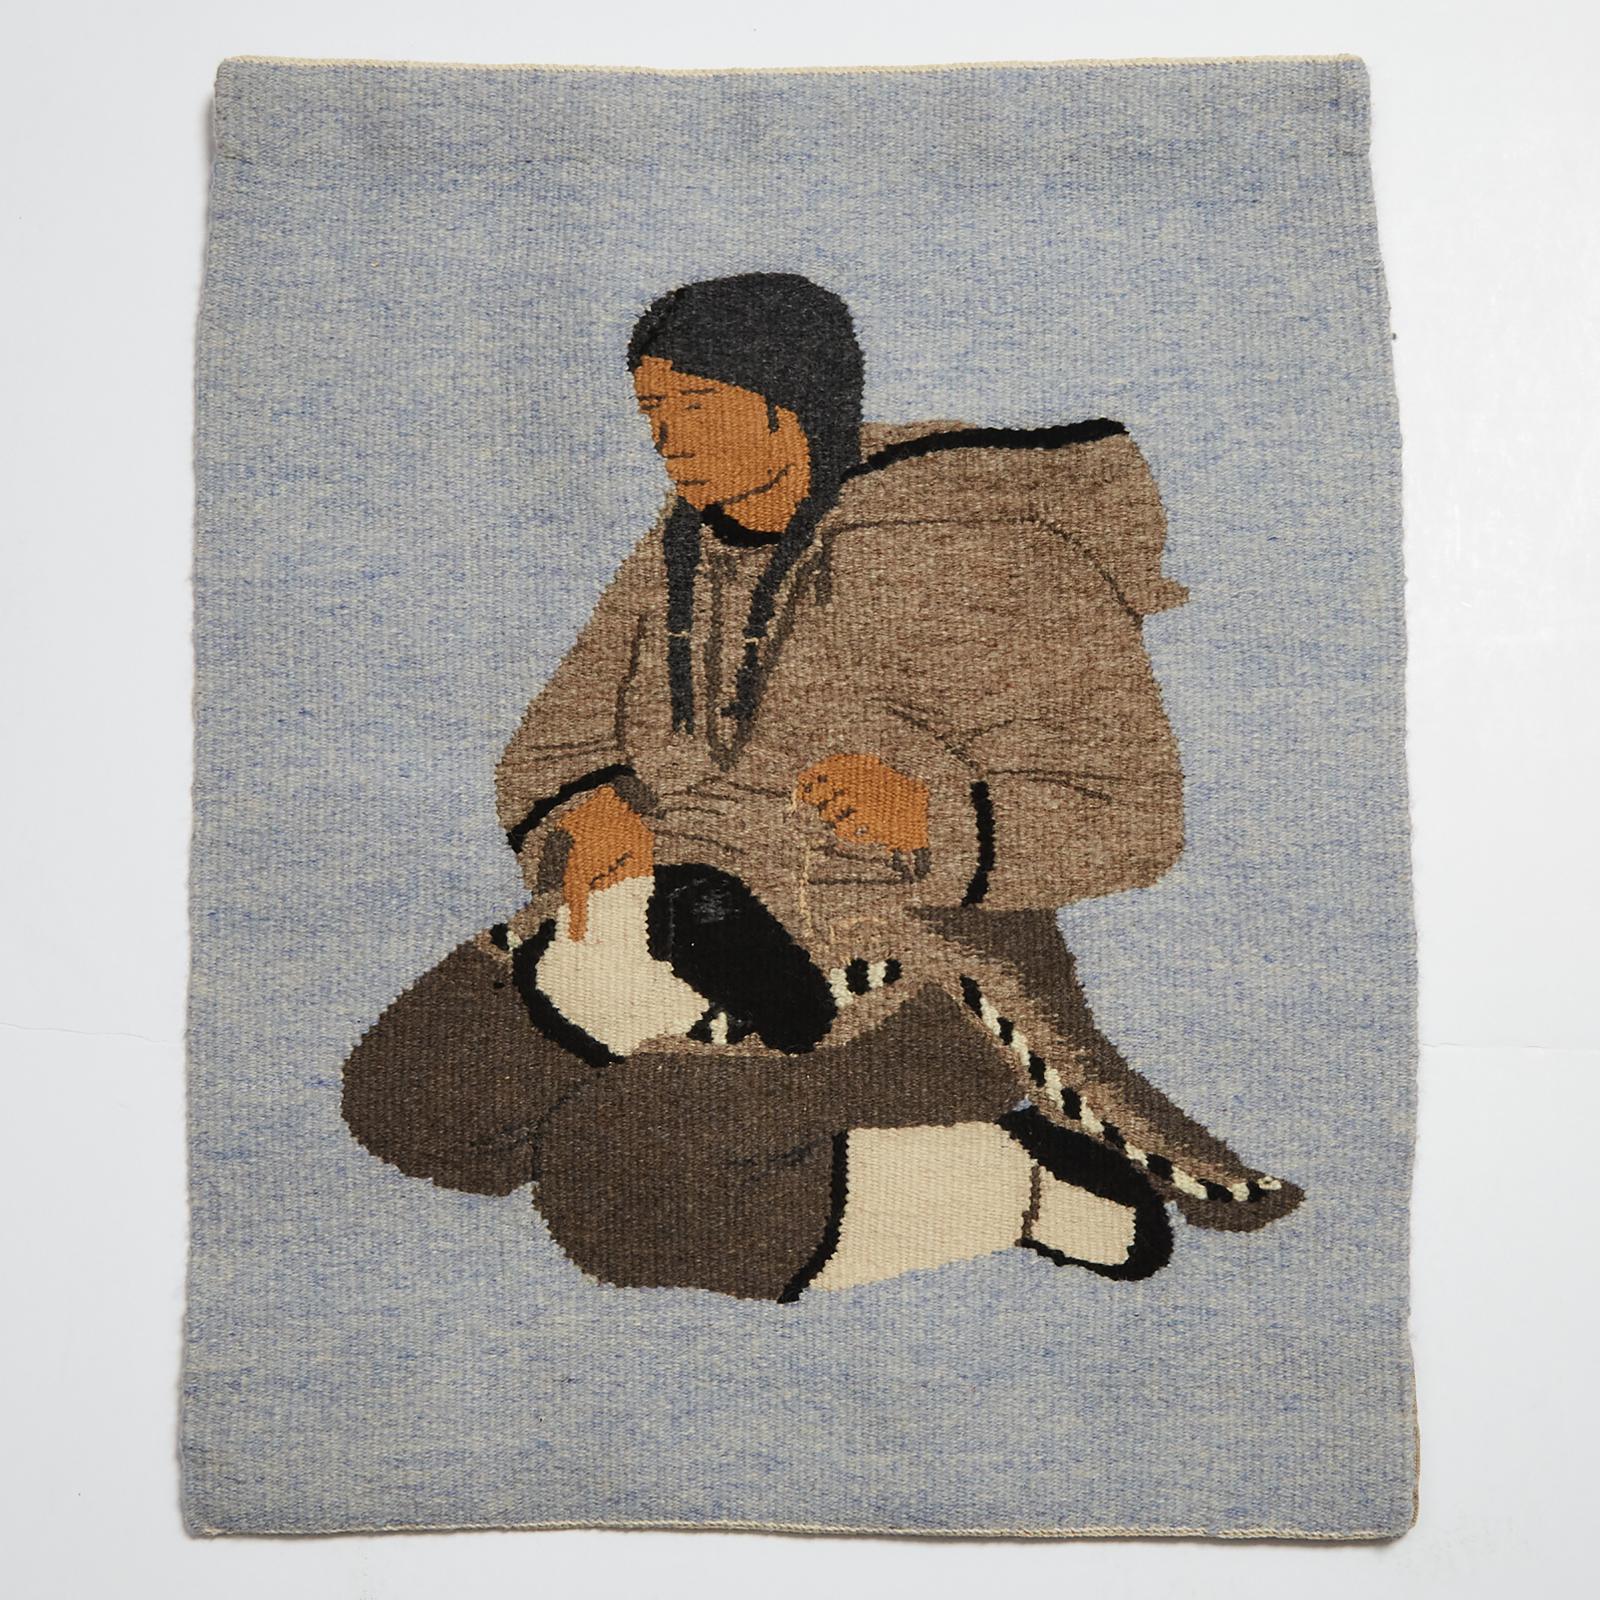 Andrew Qappik (1964) - Sewing Kamik